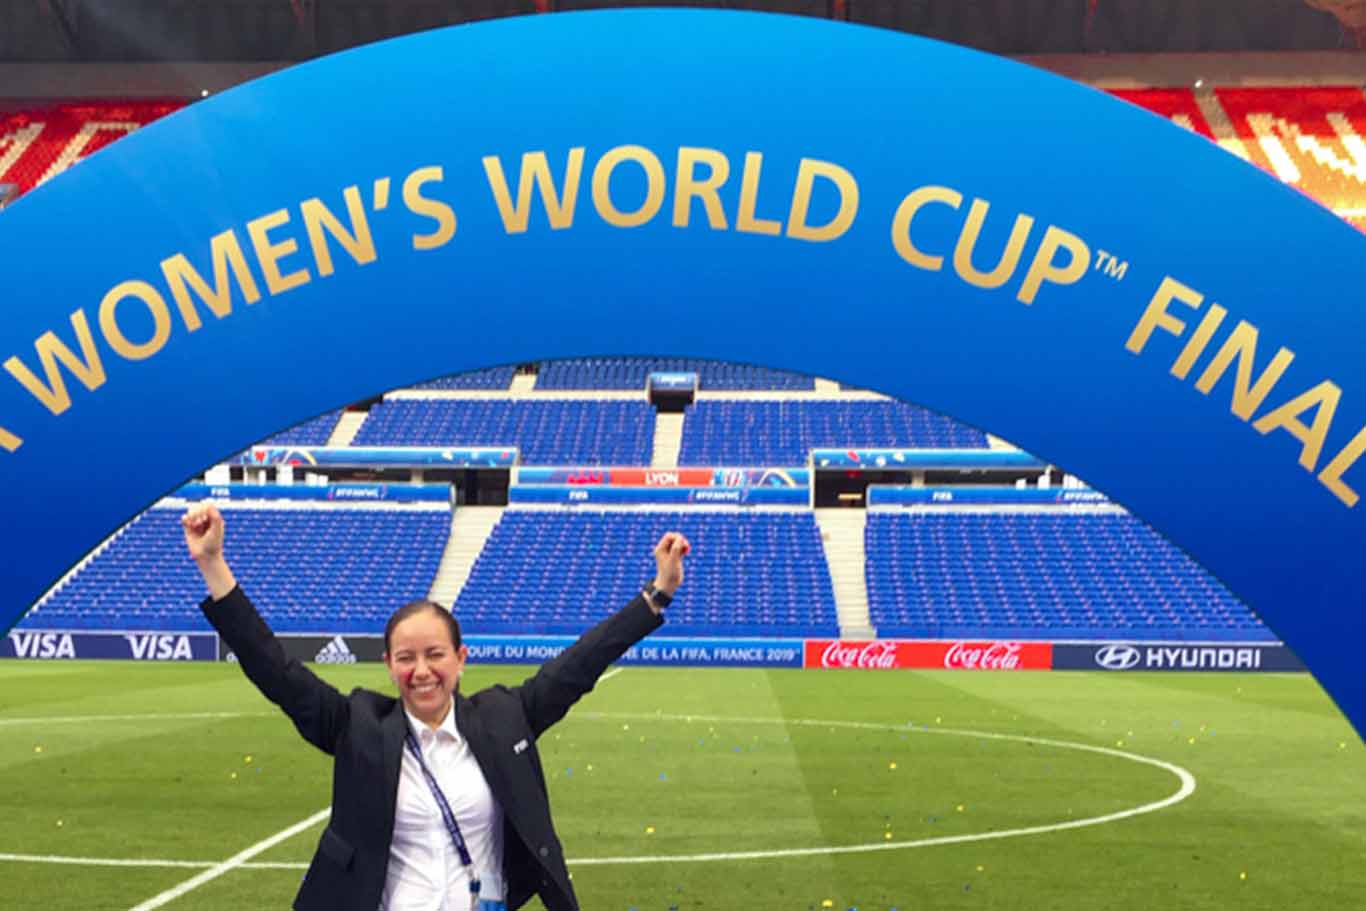 WOMENS-WORLD-CUP-MEXICANA-TRABAJA-EN-FIFA